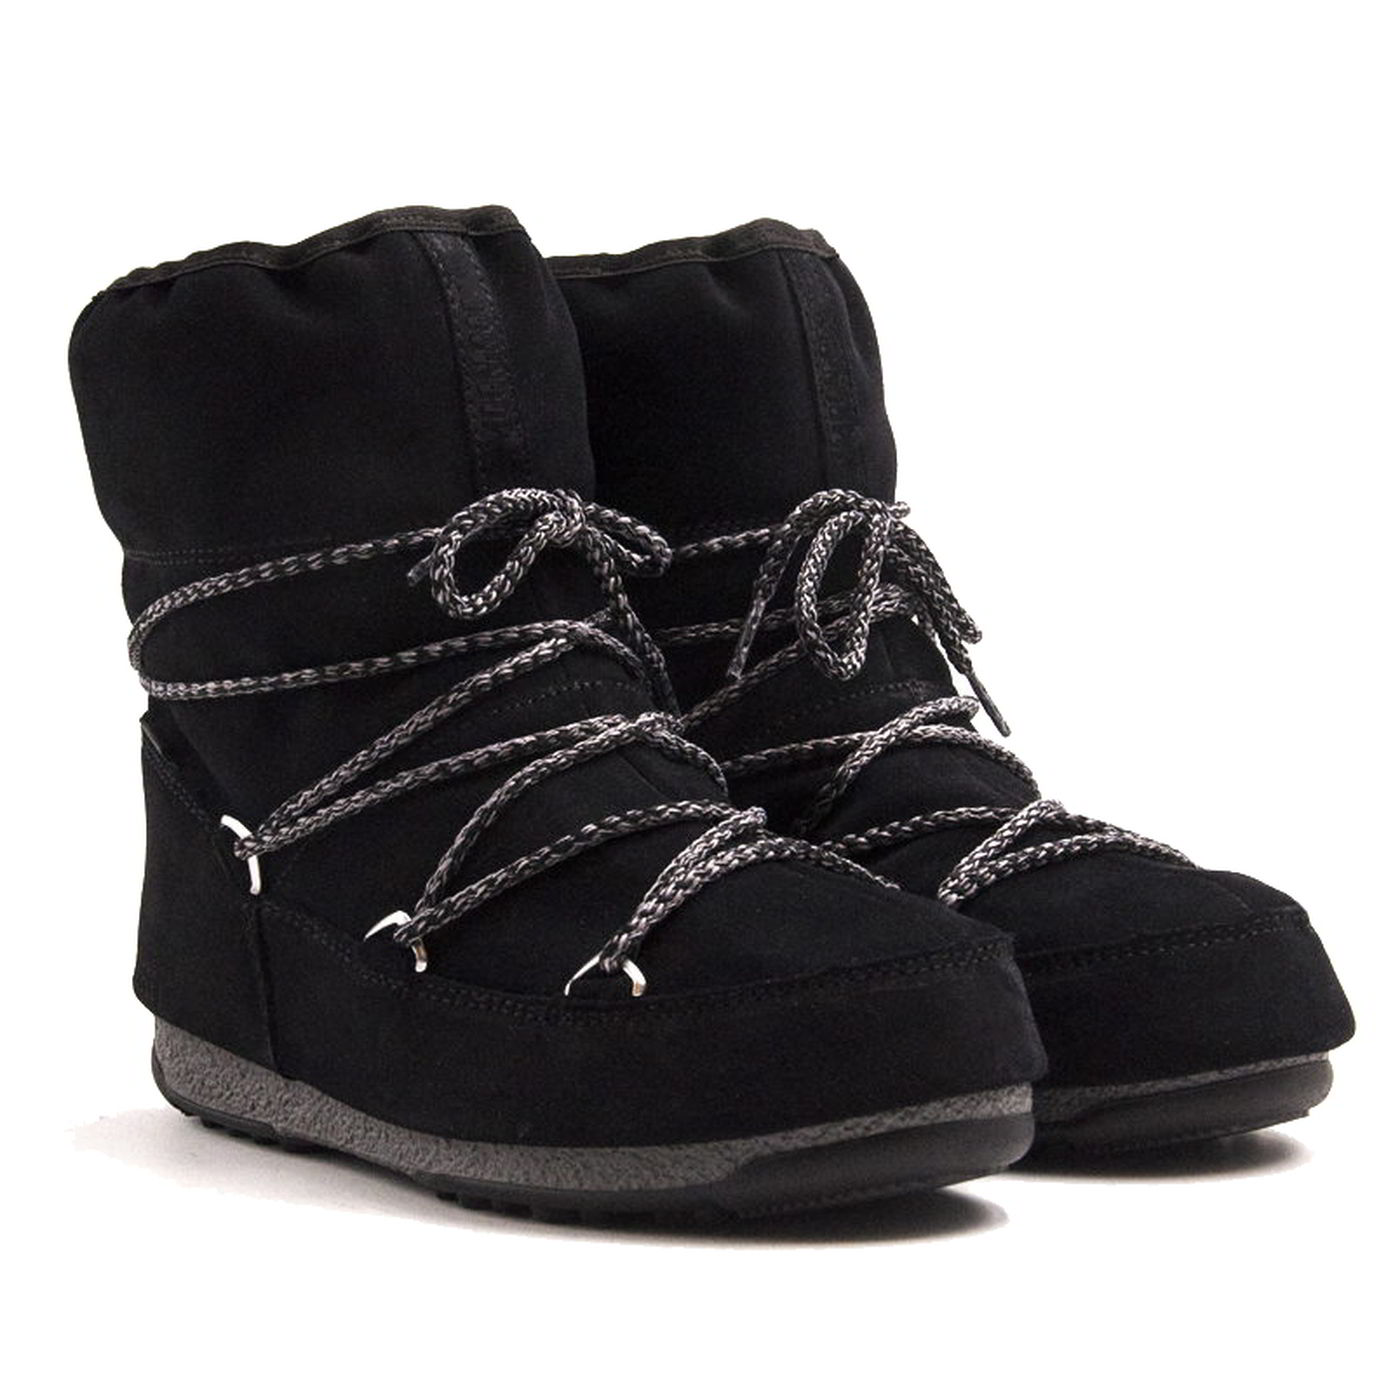 Moon Boots Womens WE Low Suede Waterproof Warm Winter Snow - UK 2-5.5 Black 2951